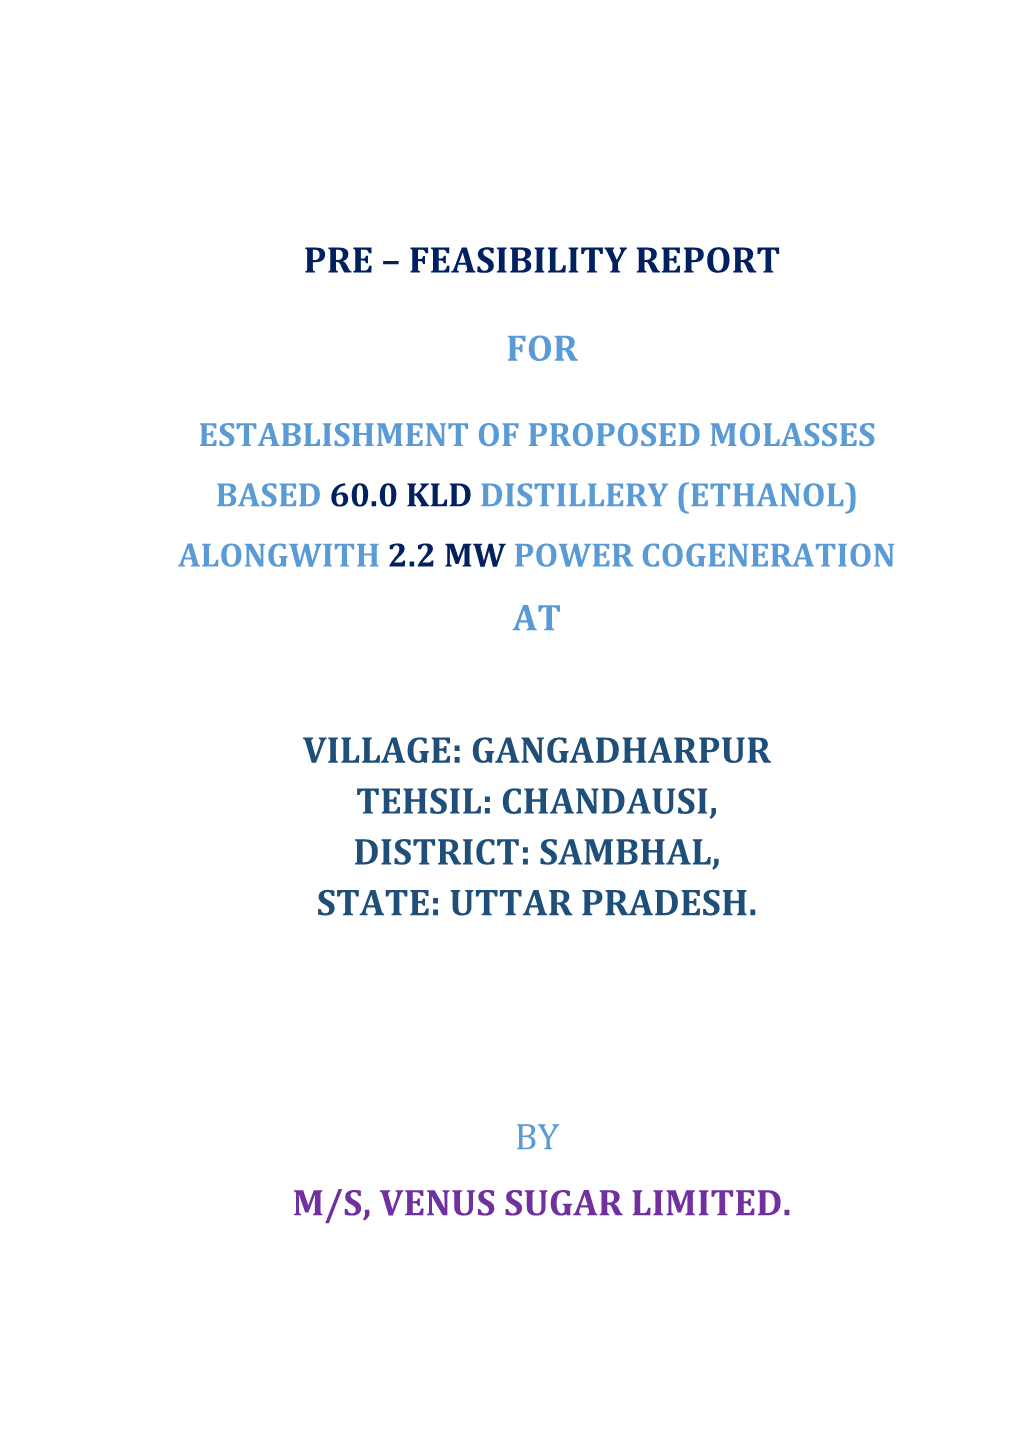 Pre – Feasibility Report for Establishment of Proposed